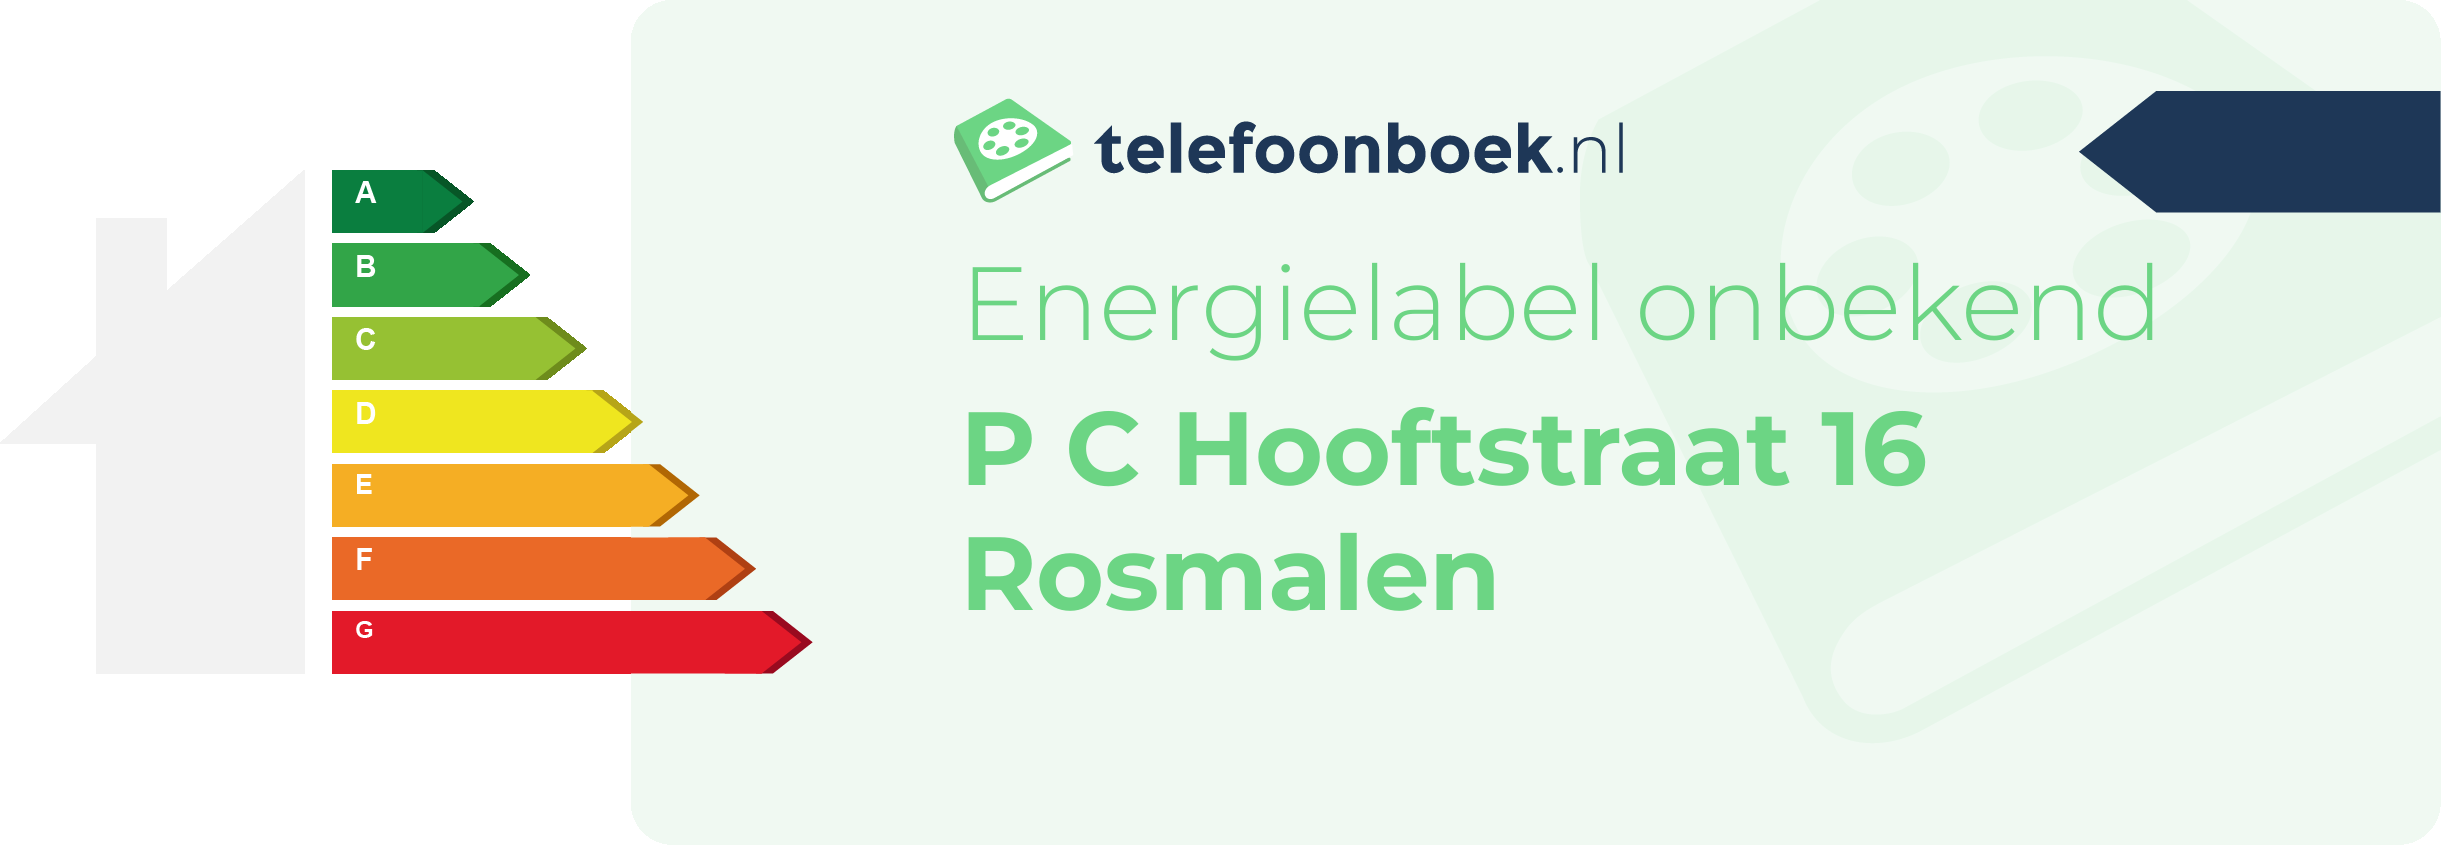 Energielabel P C Hooftstraat 16 Rosmalen